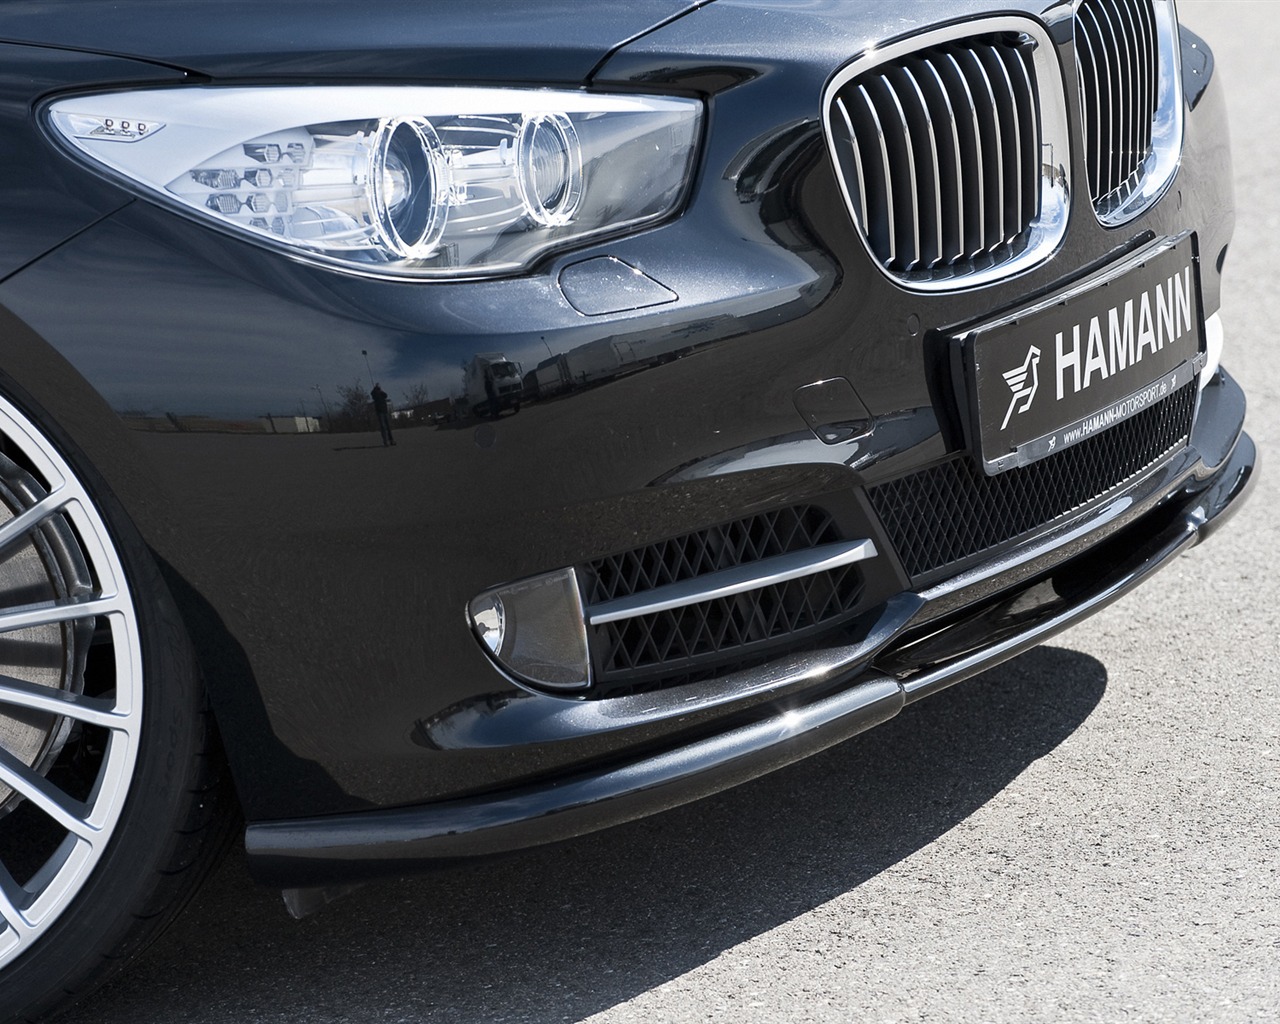 Hamann BMW 5-Series Gran Turismo - 2010 宝马21 - 1280x1024